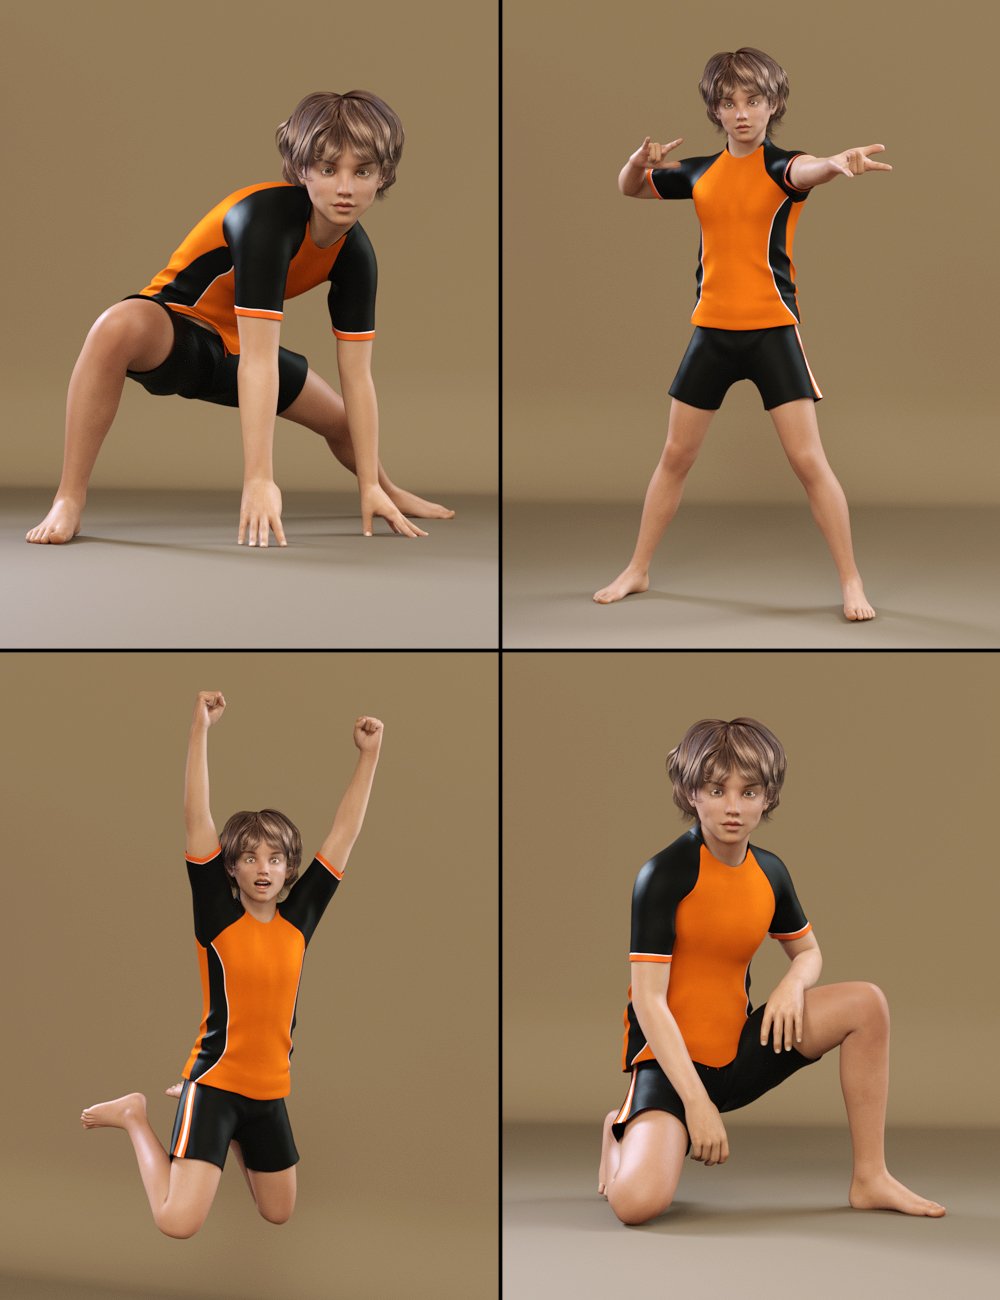 Hero Boy Poses for Tween Ryan 7 by: Val3dart, 3D Models by Daz 3D